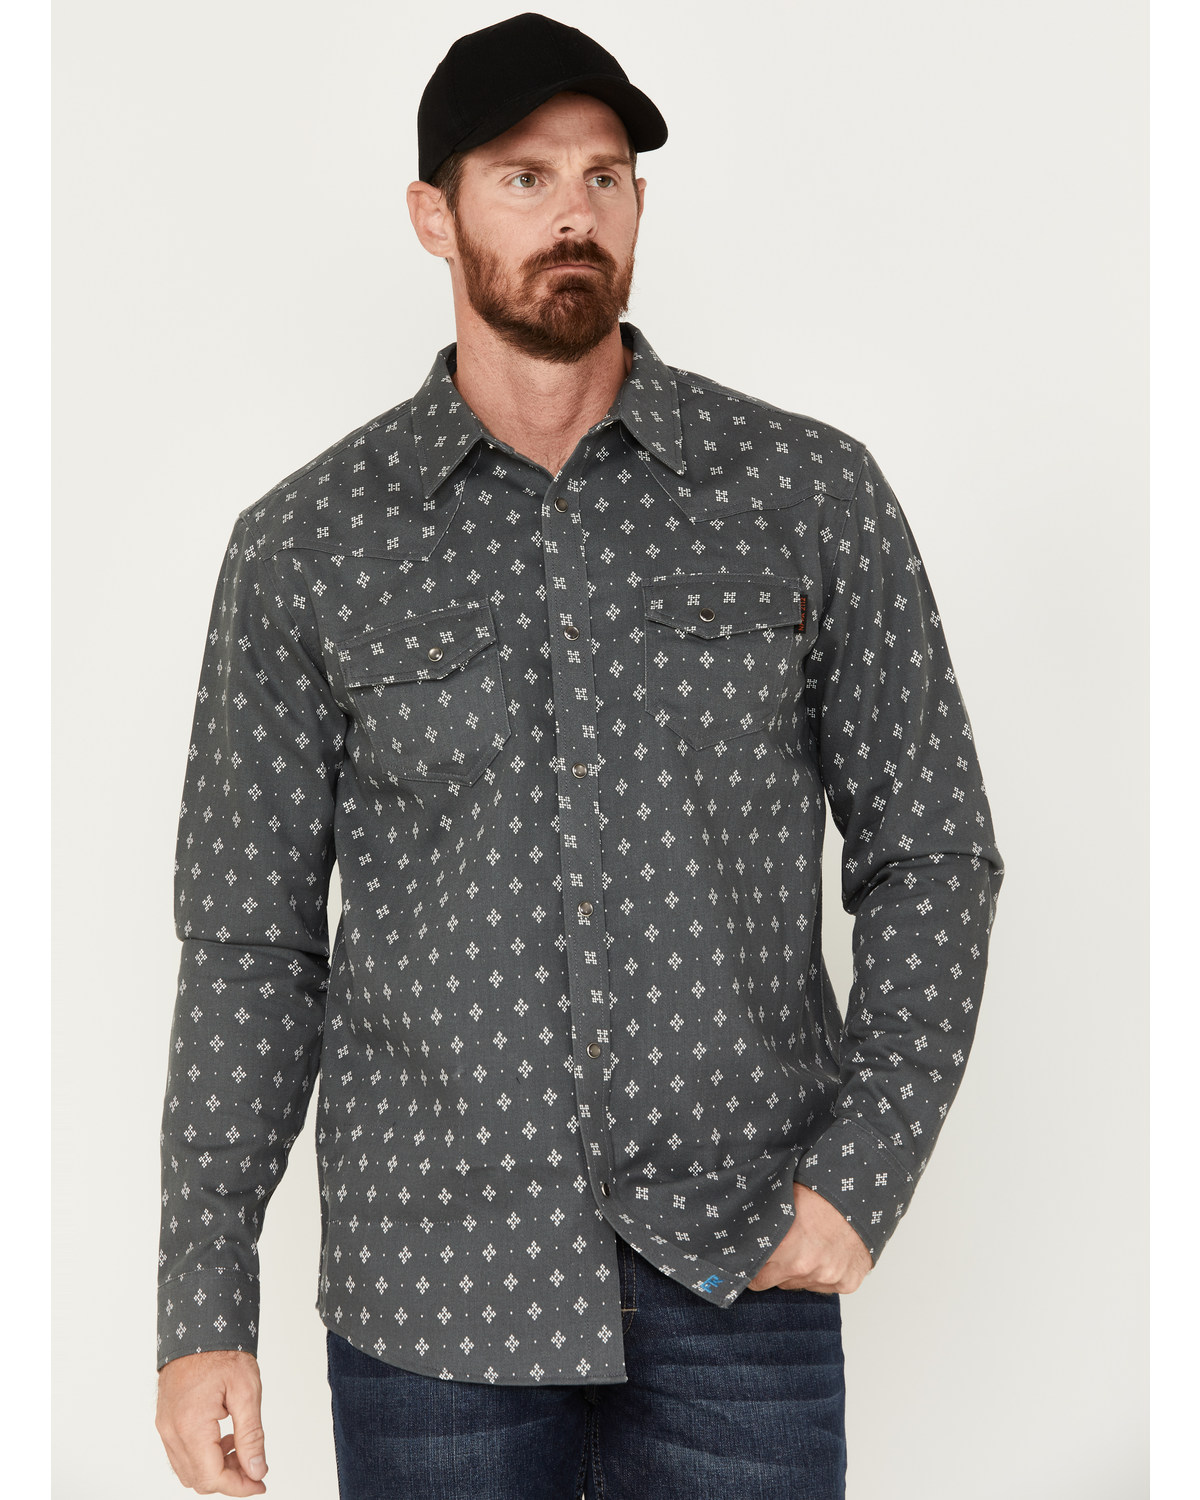 Cody James Men's FR Geo Print Long Sleeve Snap Work Shirt